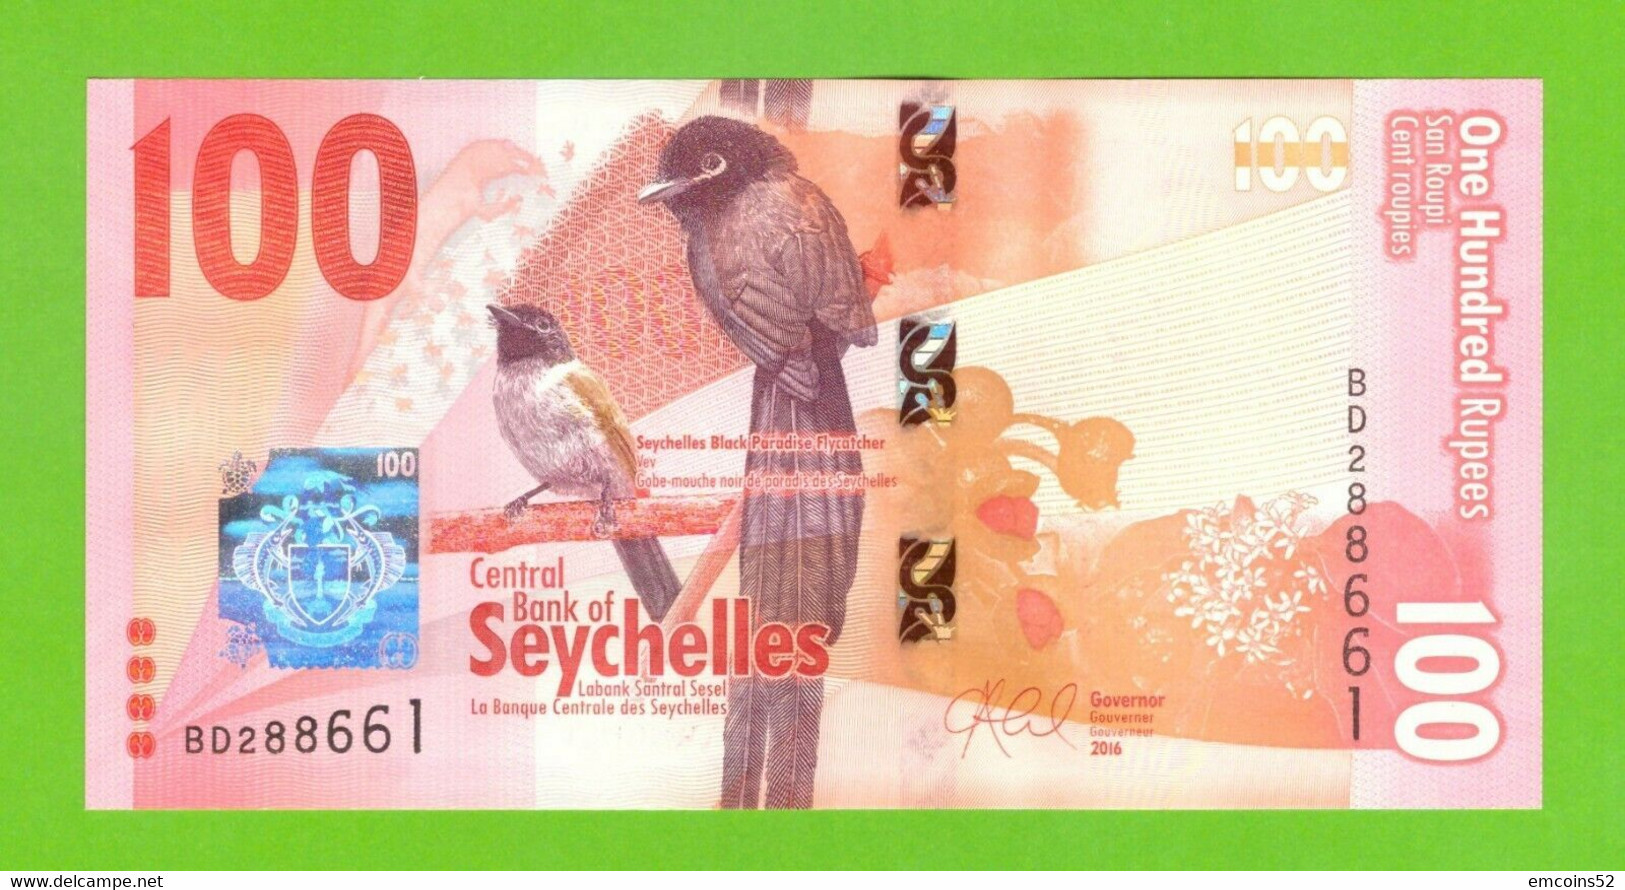 SEYCHELLES 100 RUPEES 2016  P-50  UNC - Seychellen